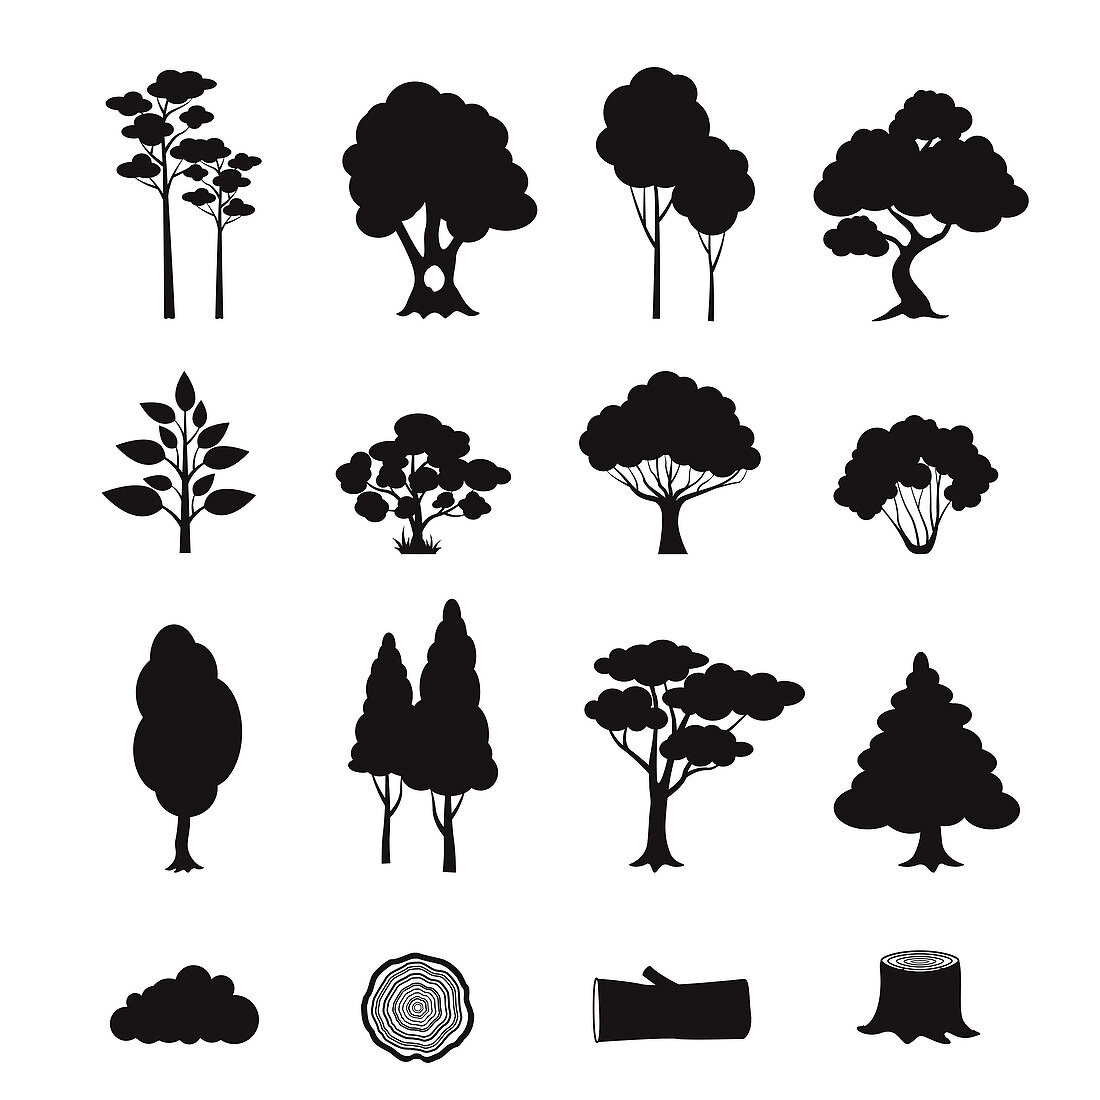 Tree icons, illustration